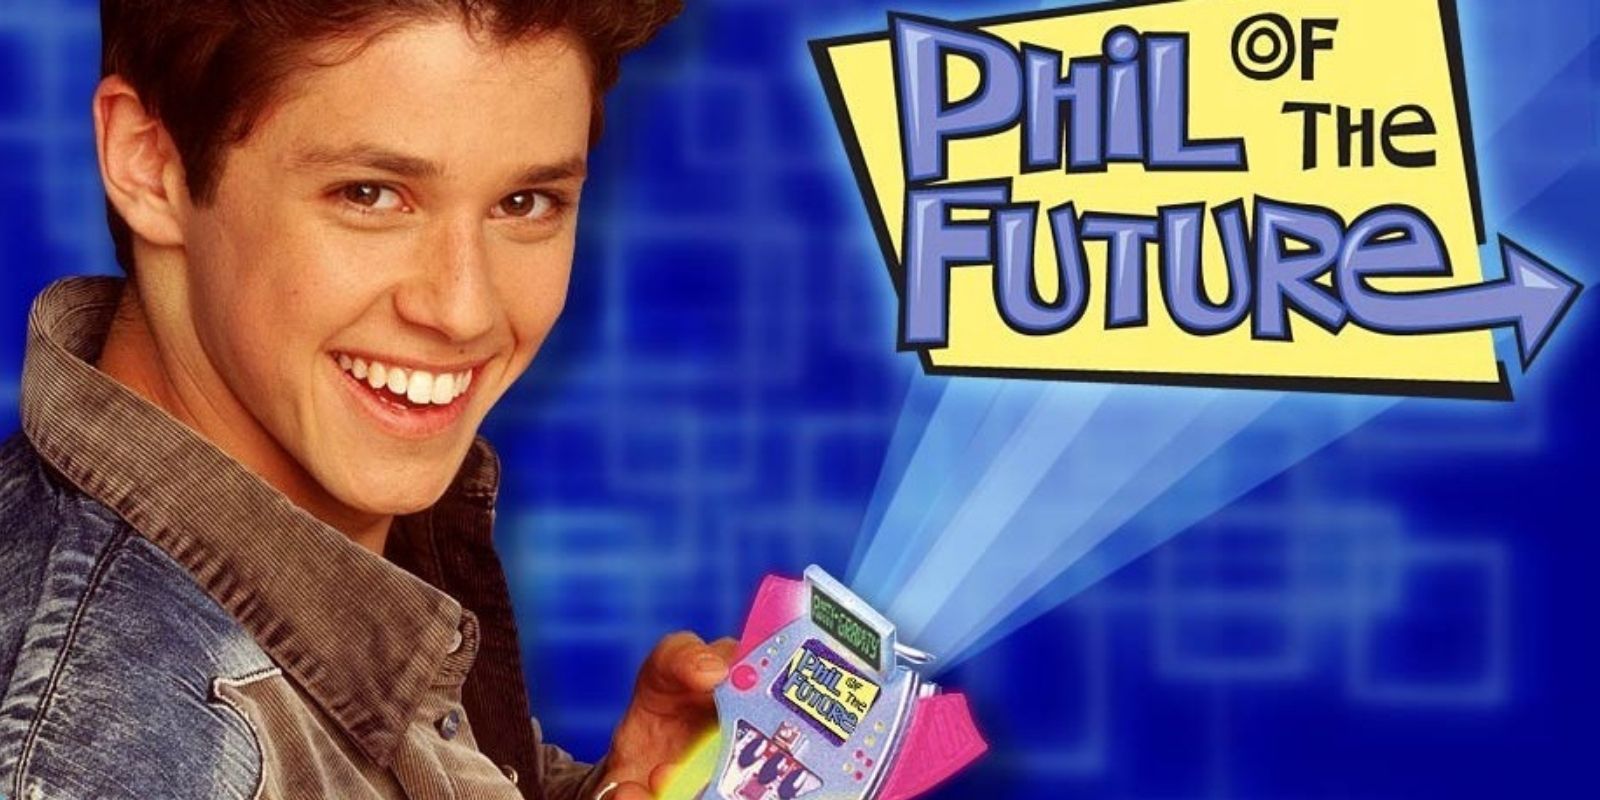 Phil of the future, phil